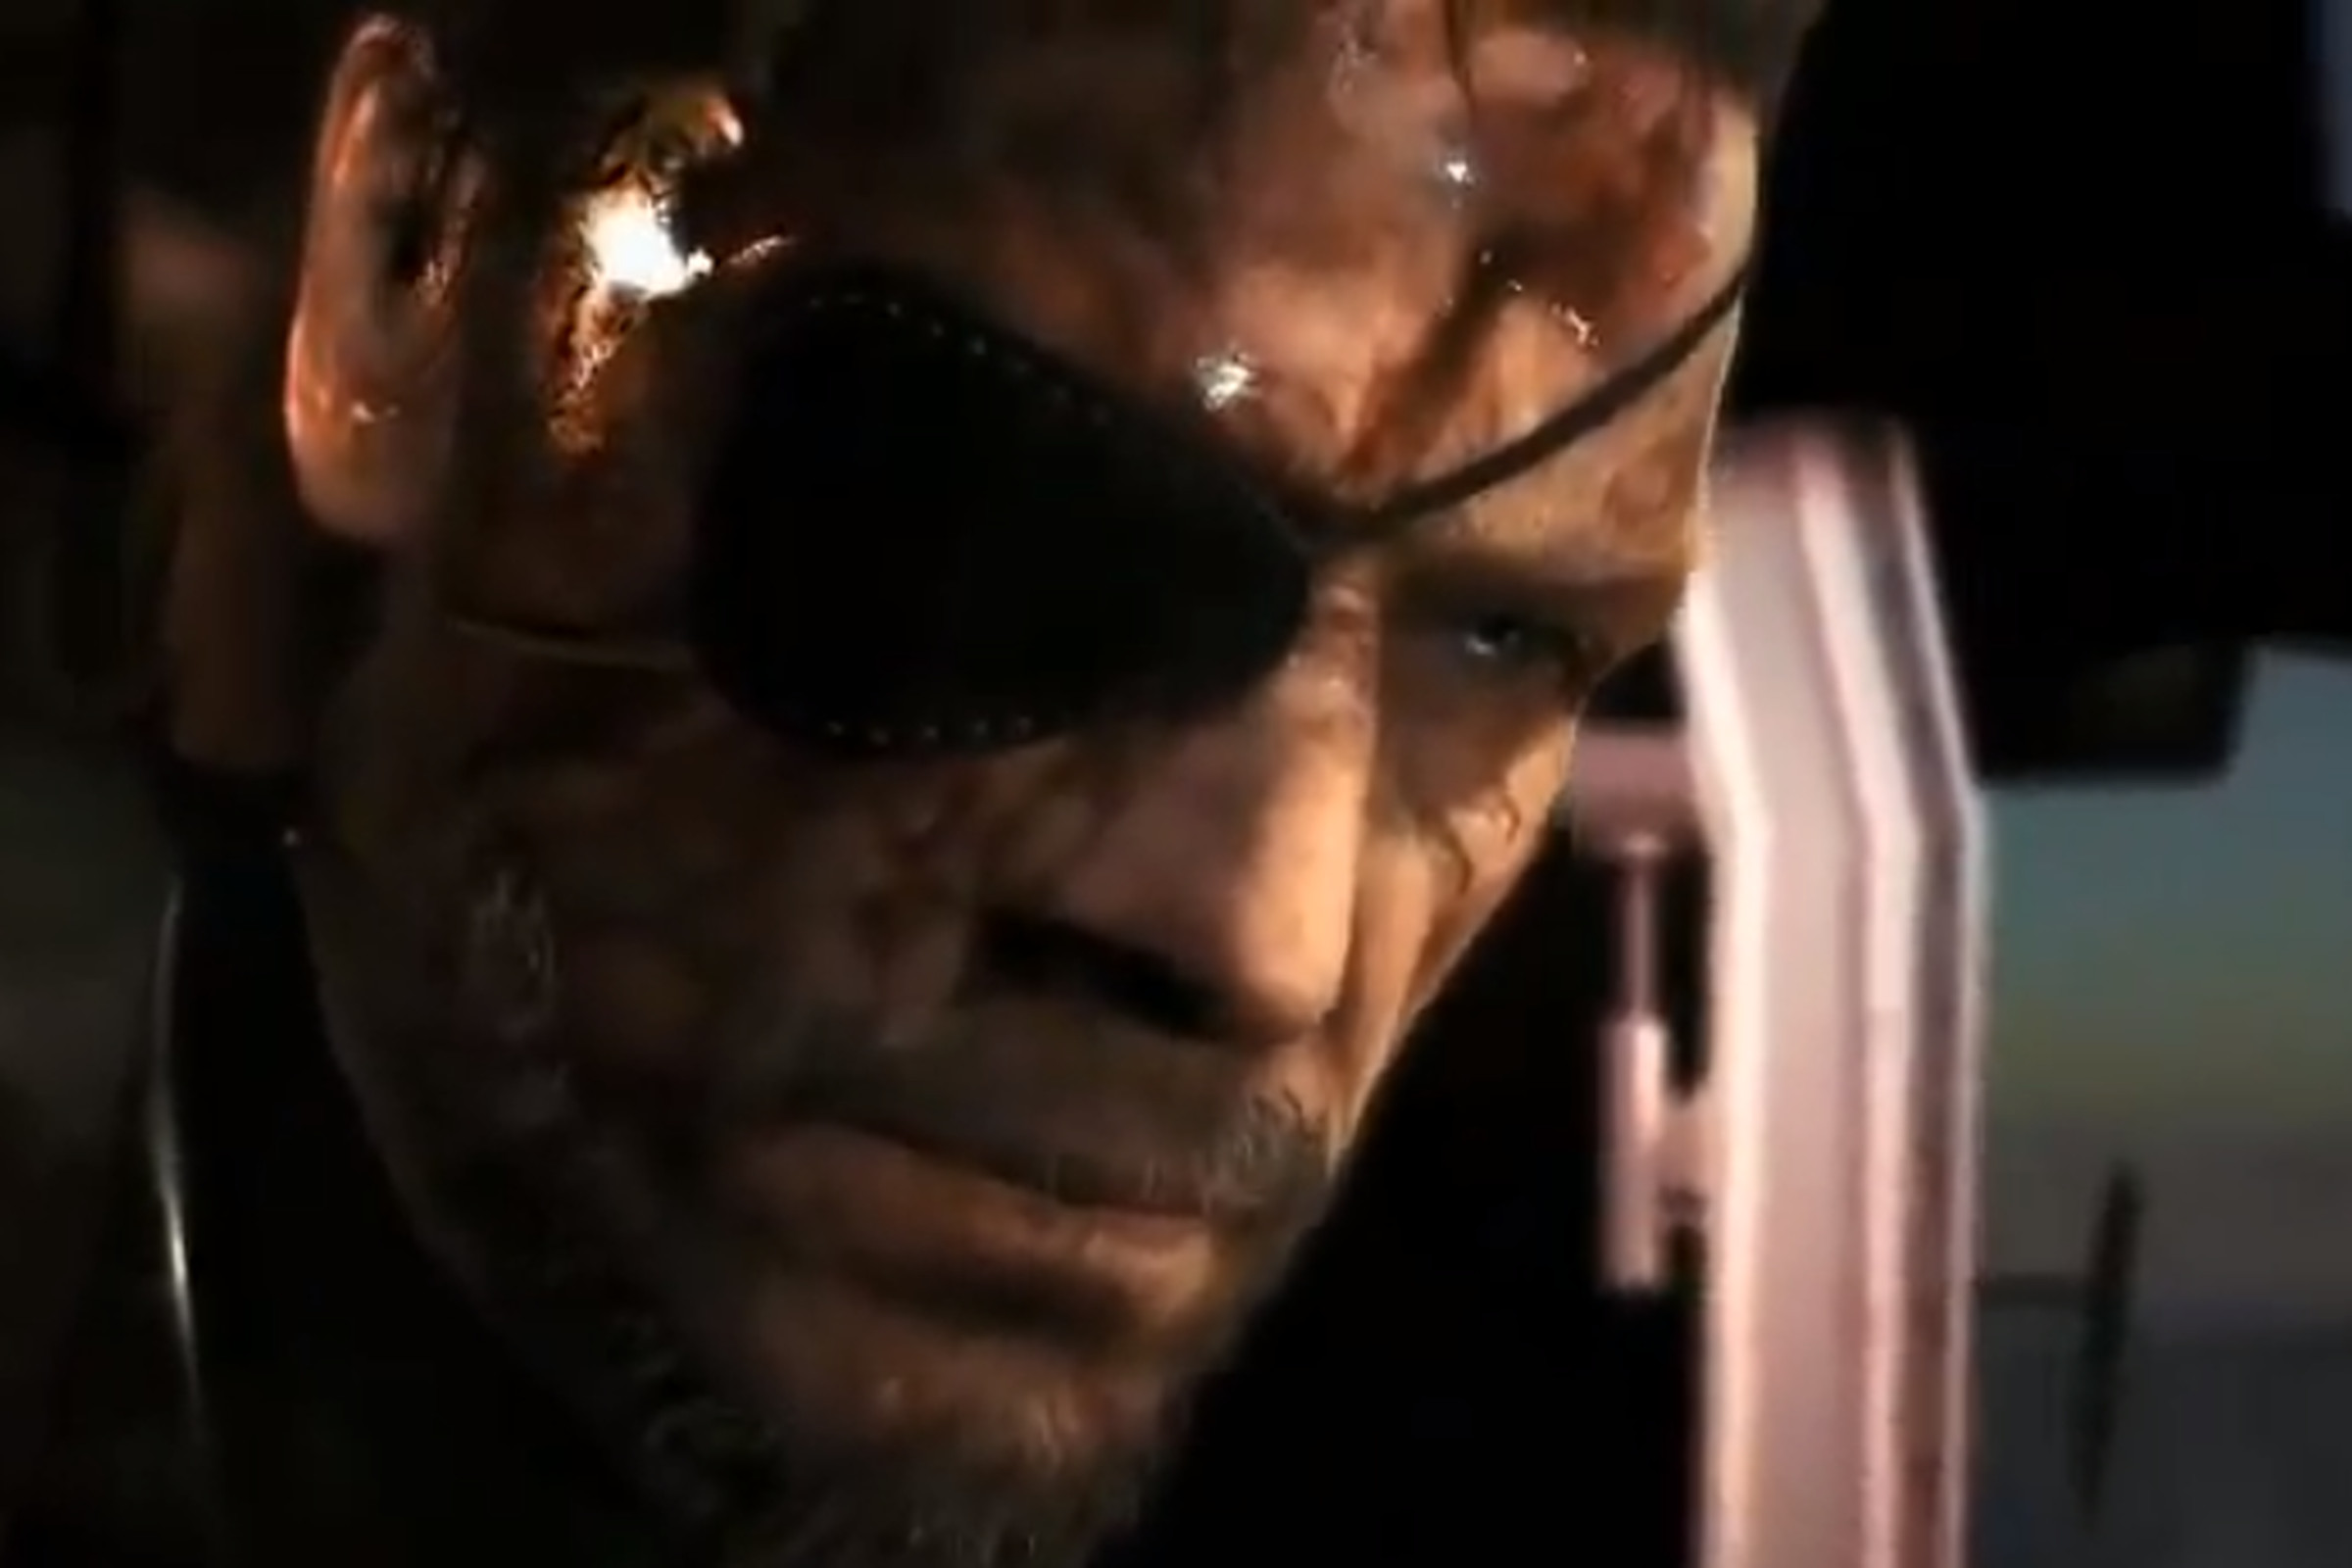 Metal Gear Solid 5: The Phantom Pain (trailer image)